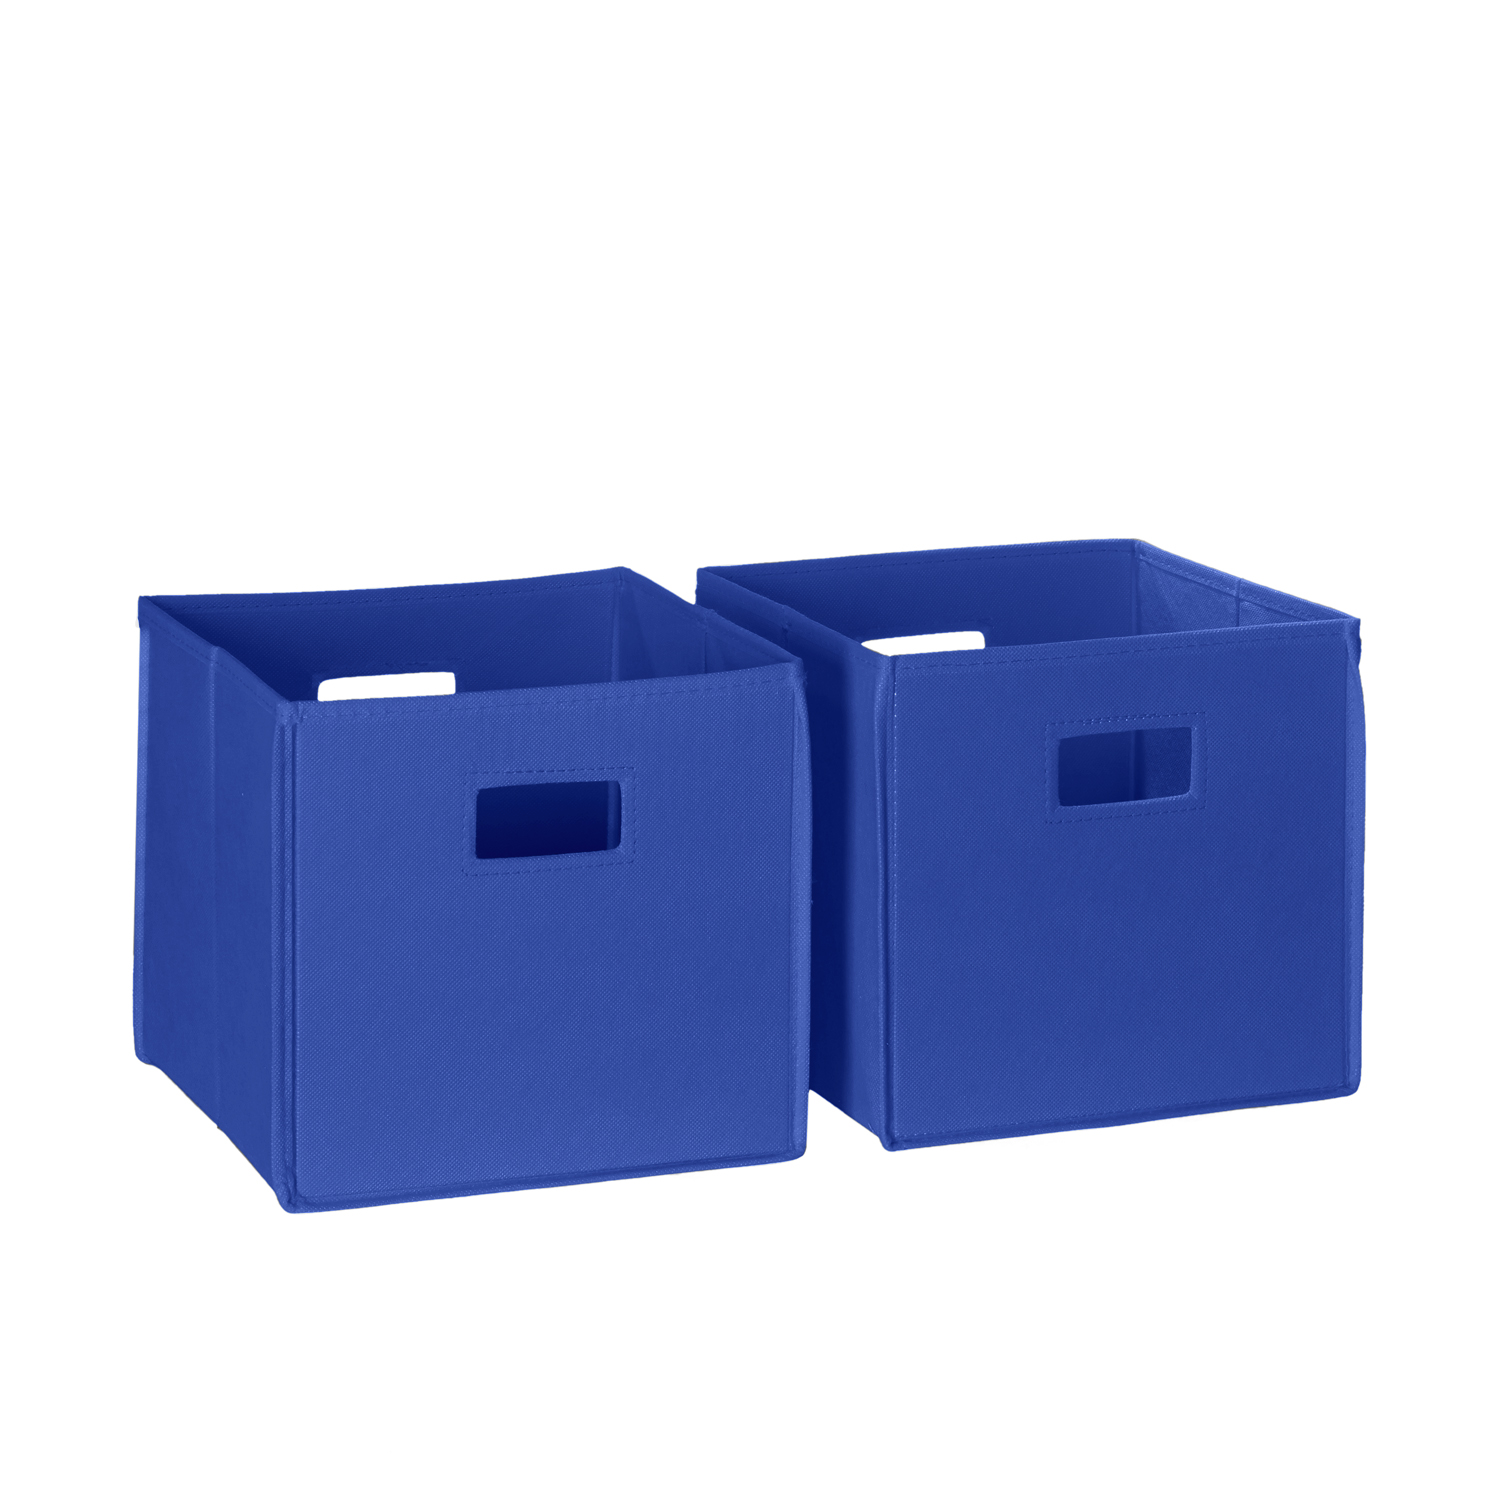 RiverRidge Home Folding Fabric Cube Storage Bin Set of 2 - Blue - image 1 of 9